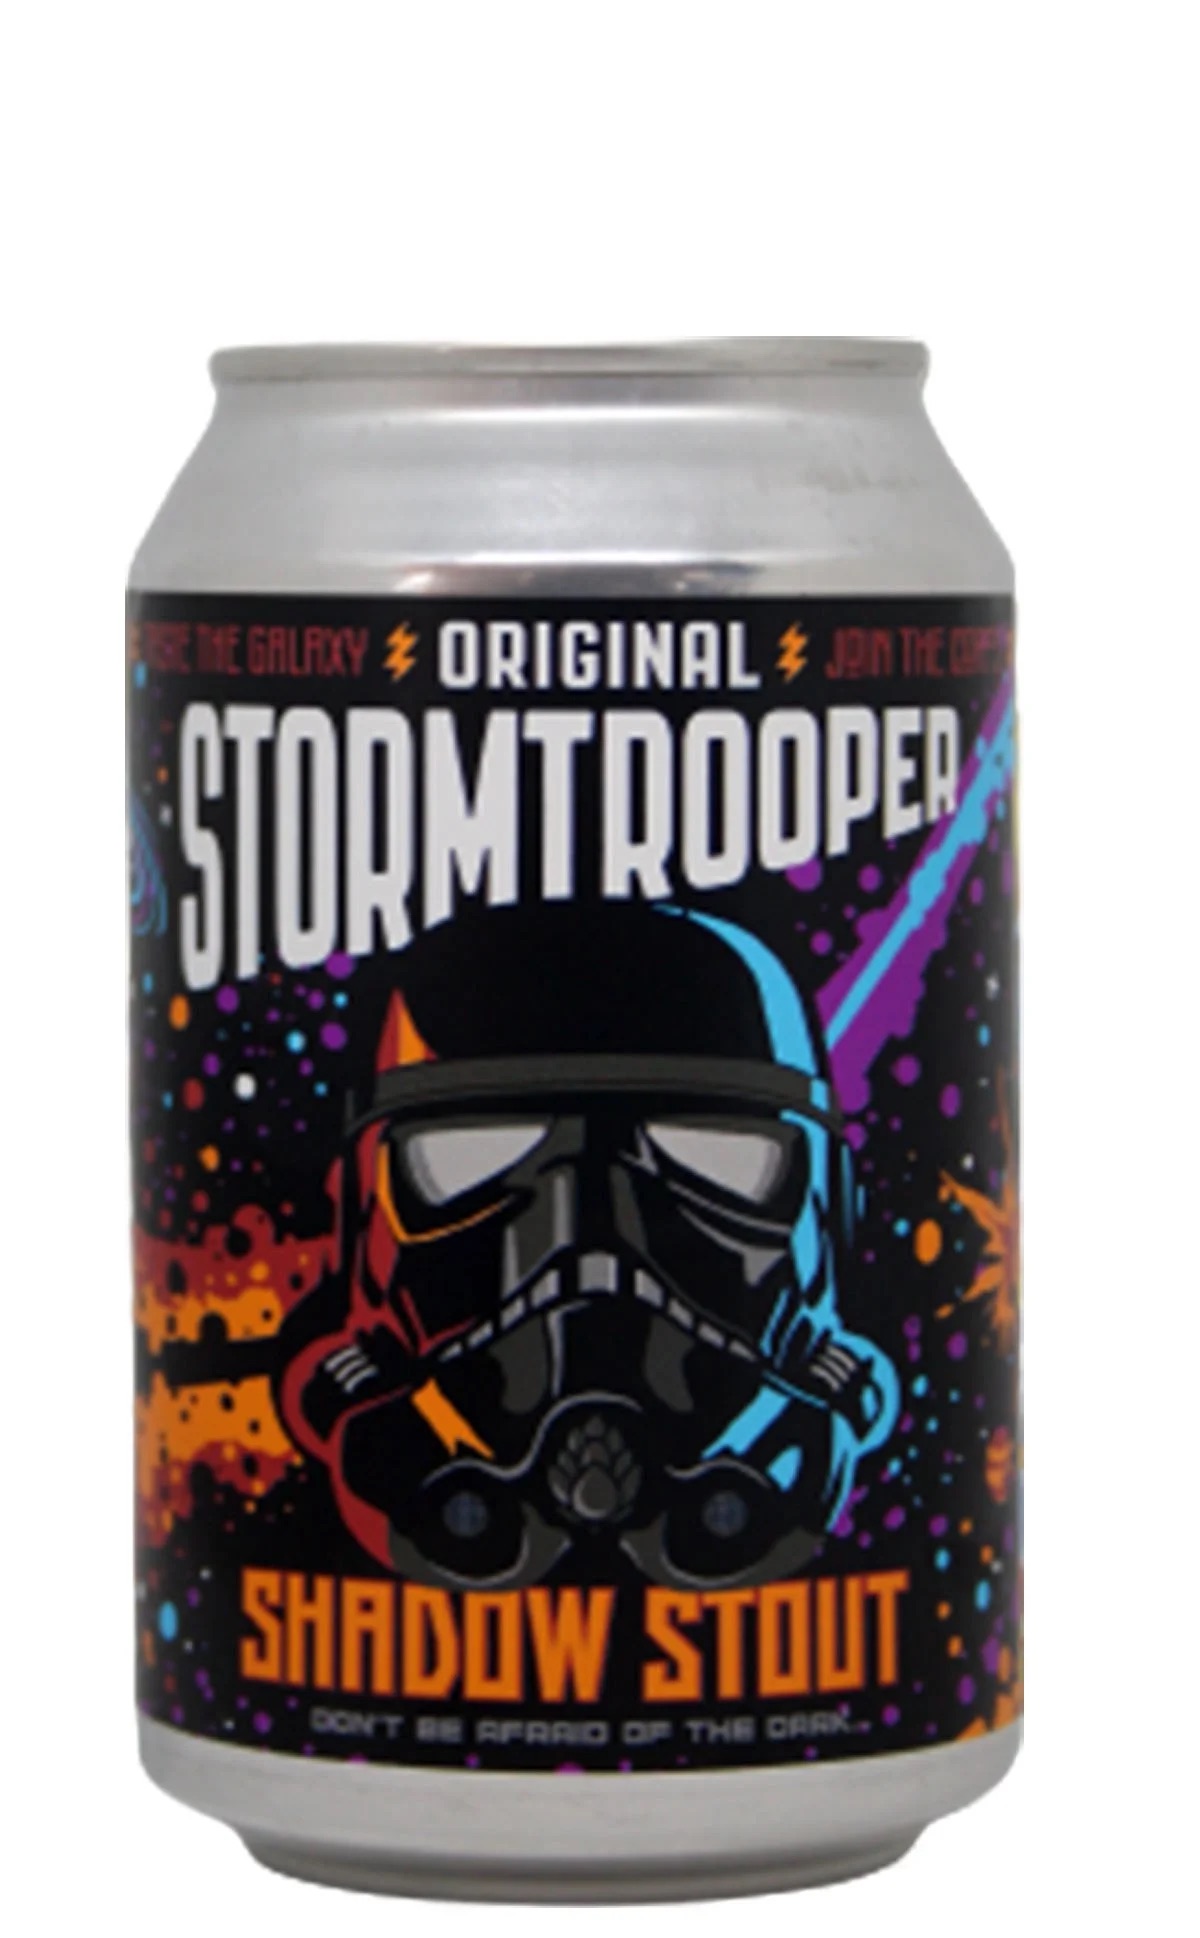 Original Stormtrooper Shadow Stout